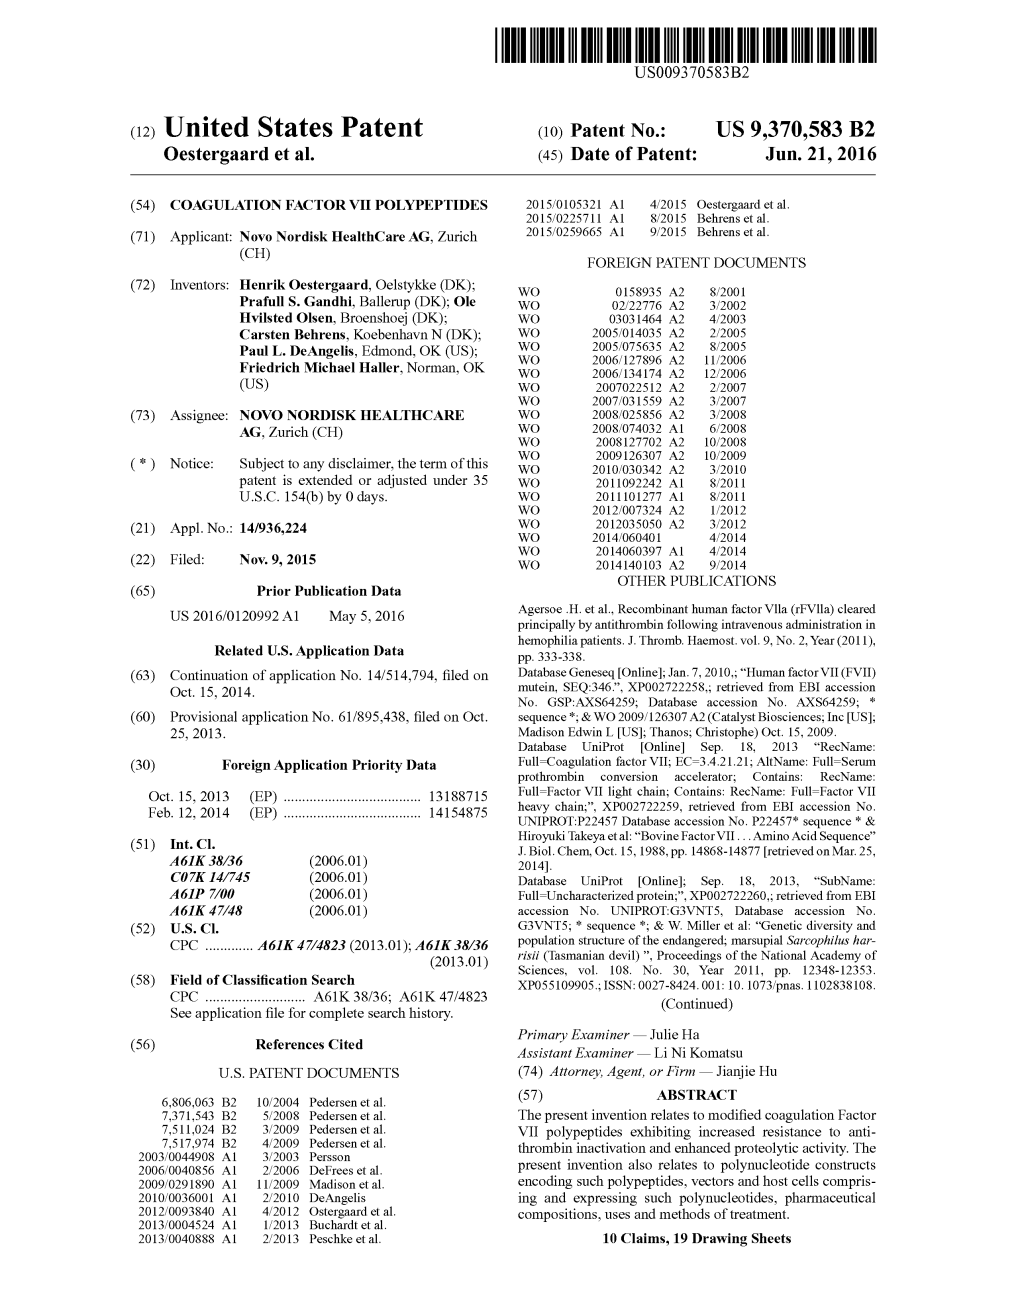 (12) United States Patent (10) Patent No.: US 9,370,583 B2 Oestergaard Et Al